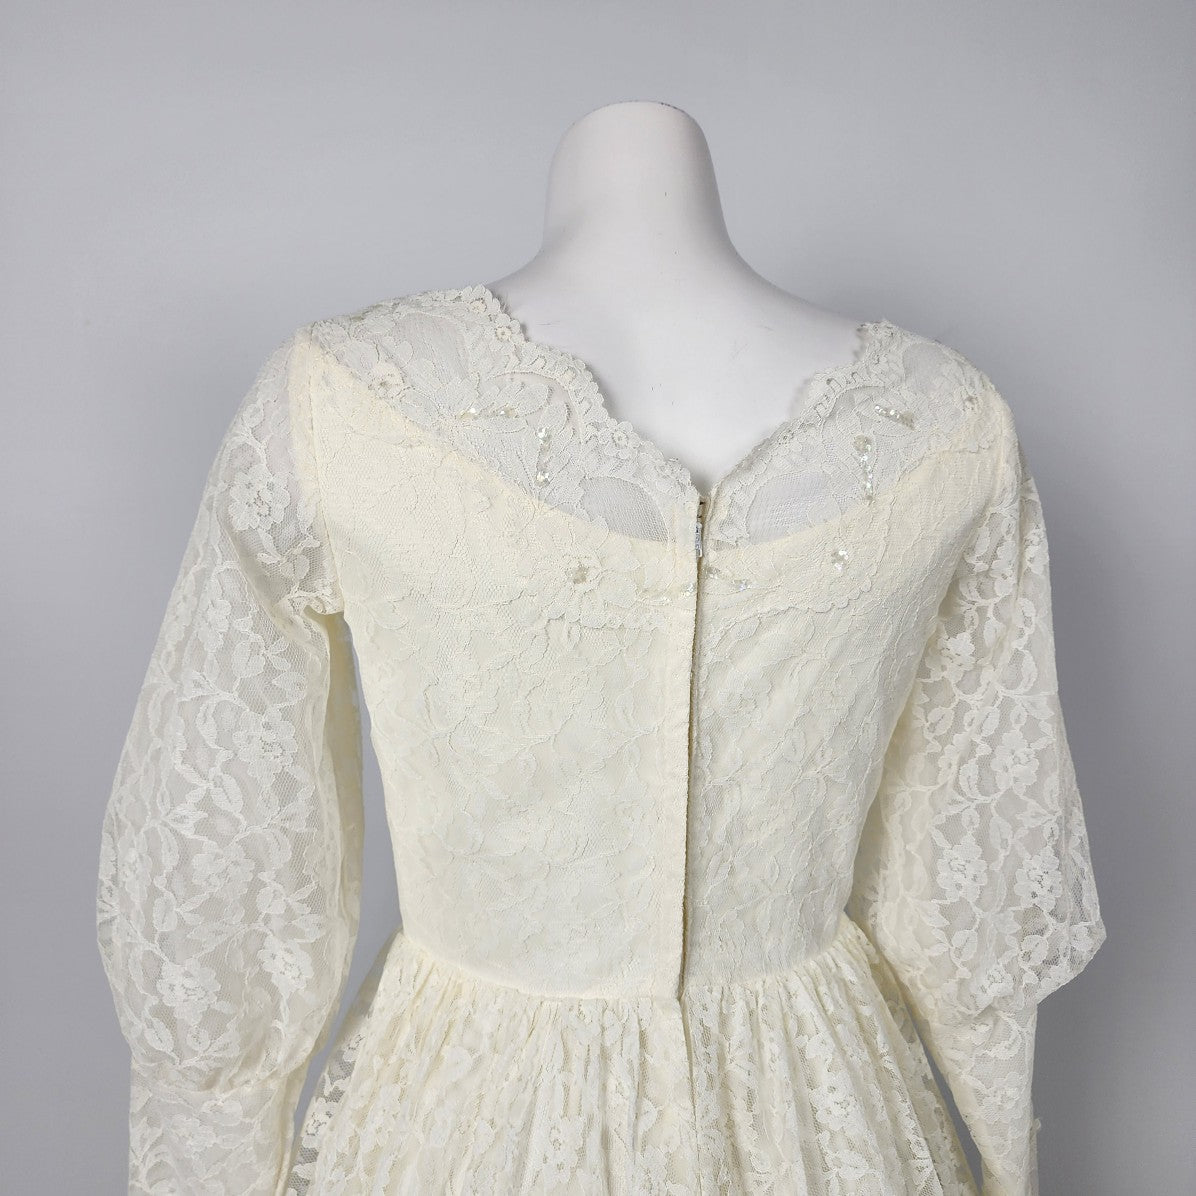 Vintage Union Label White Lace Layered Ruffle Skirt Wedding Dress Size XS/S